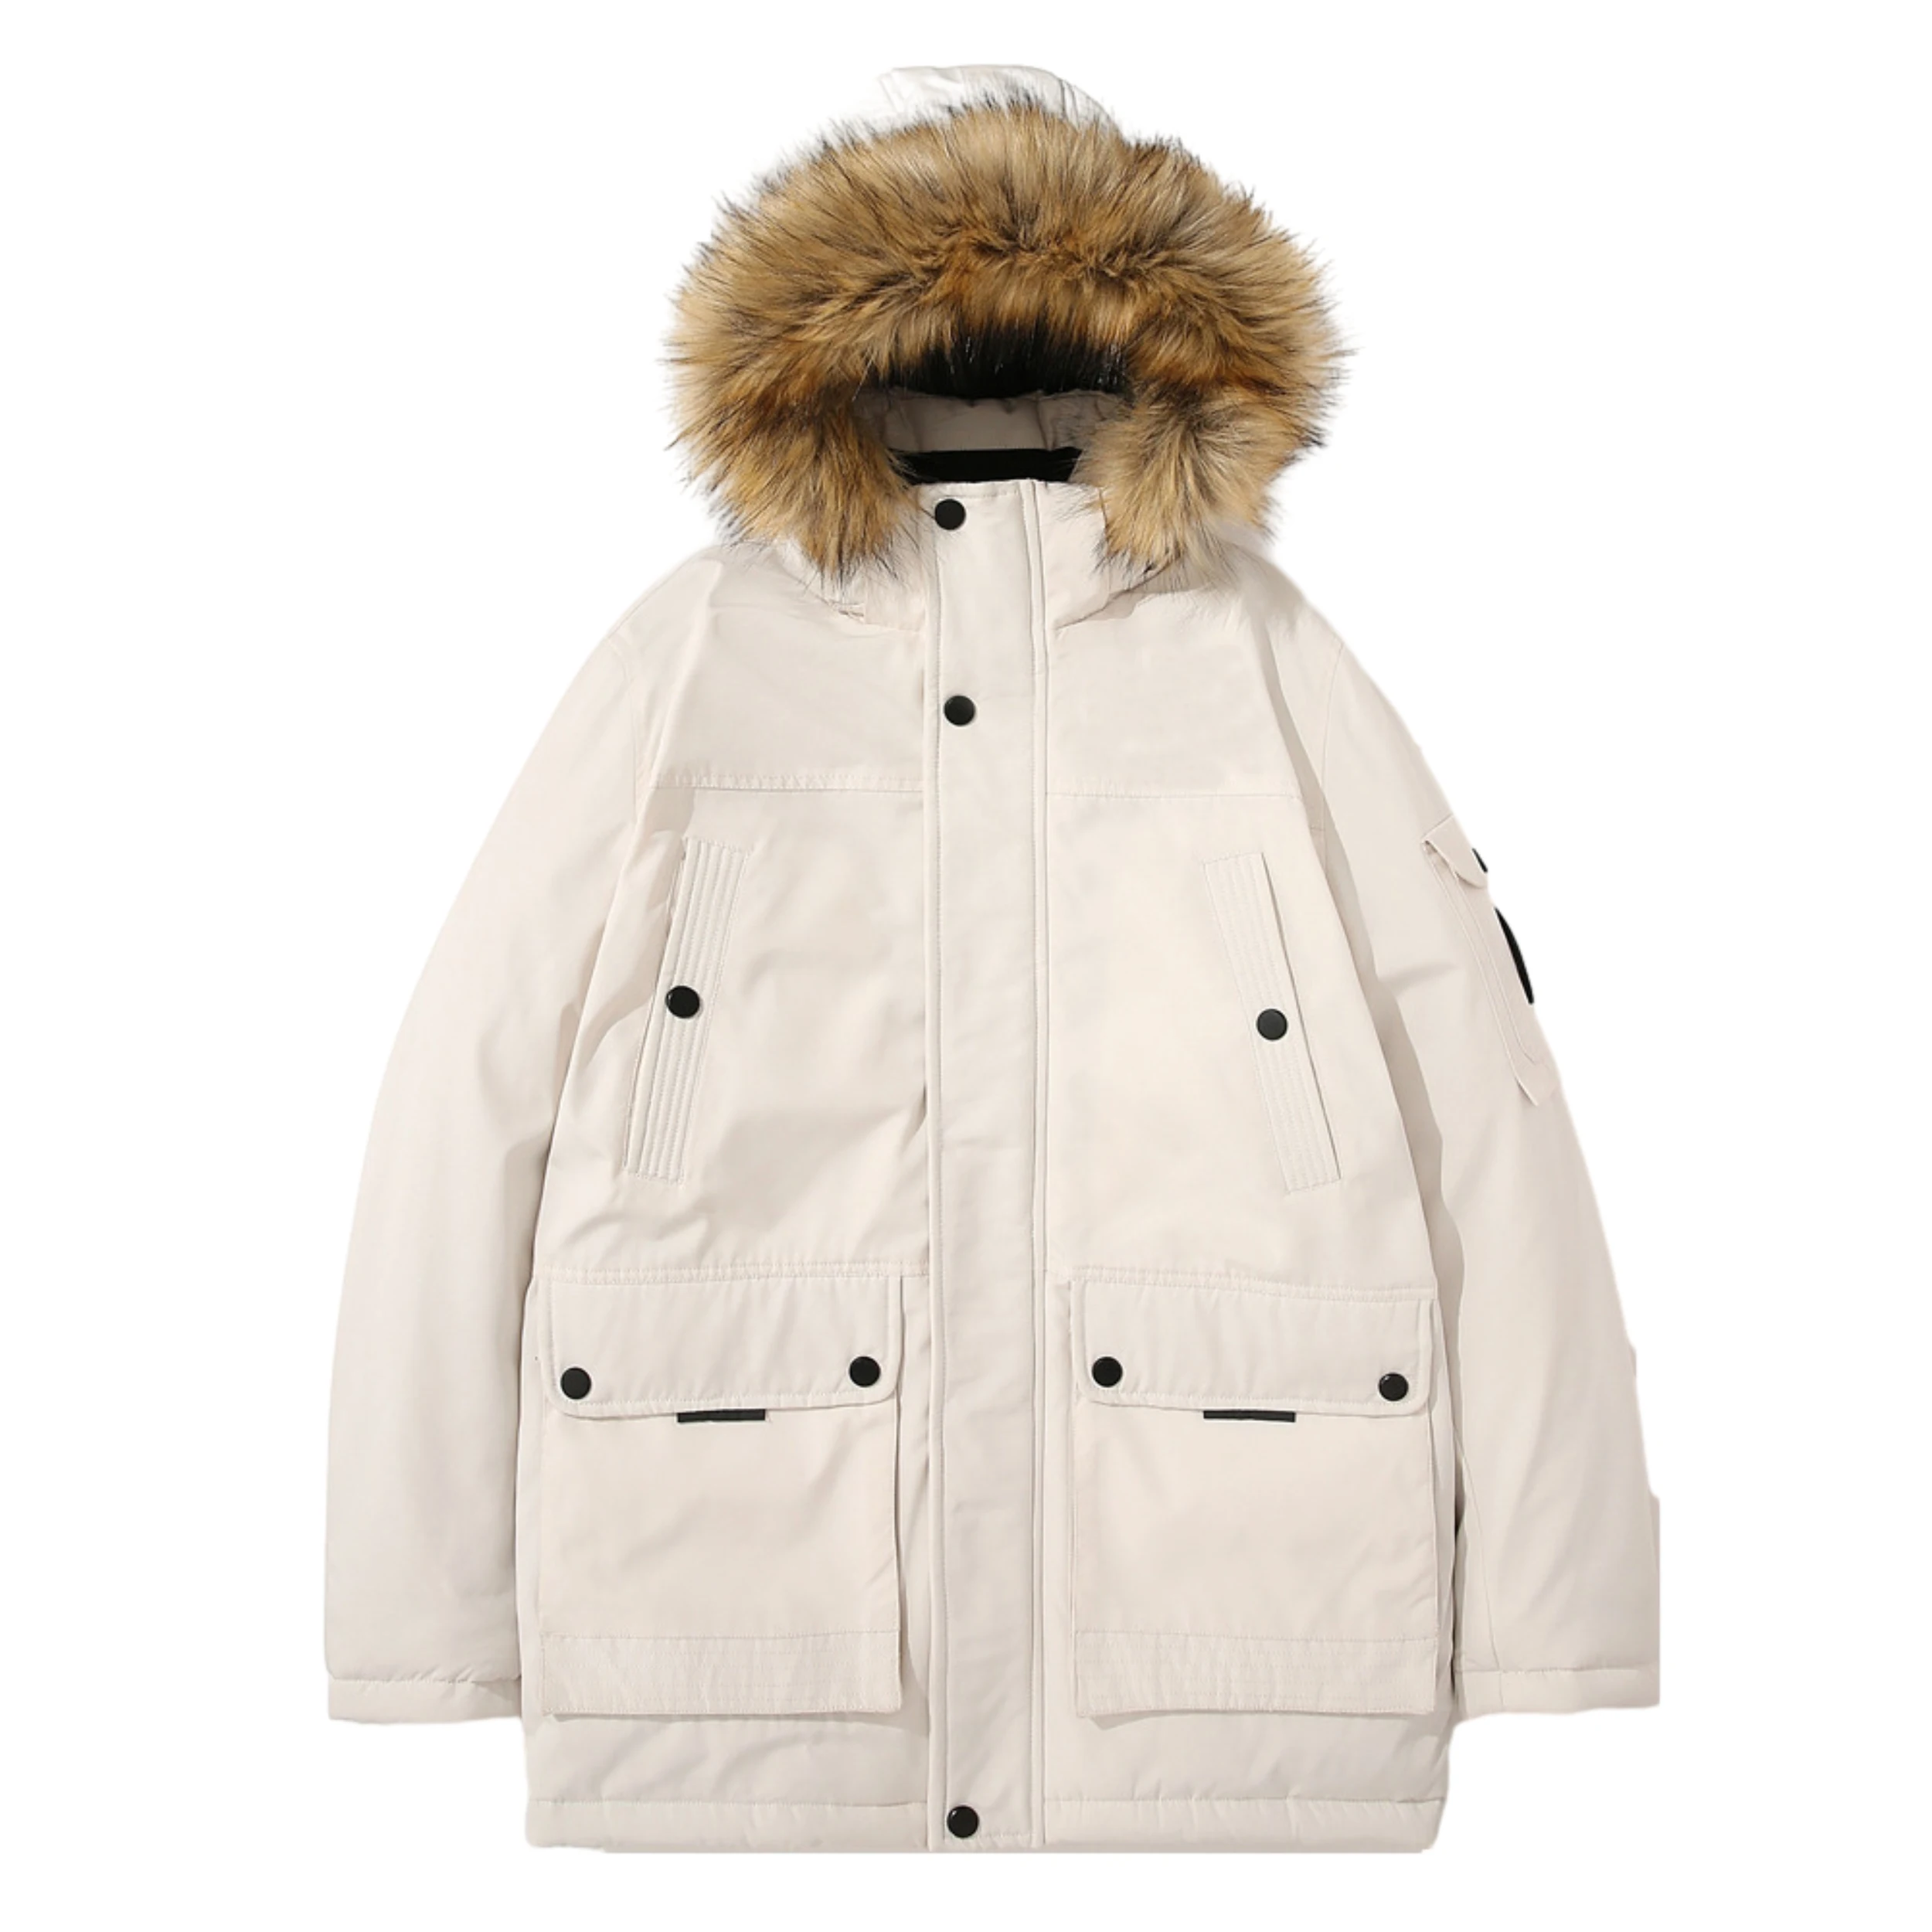 

Men's Thick Warm Outerwear Clothes Winter Jacket Cotton-padding Fleece Linning Outdoor Parka Coat Hooded Windbreaker